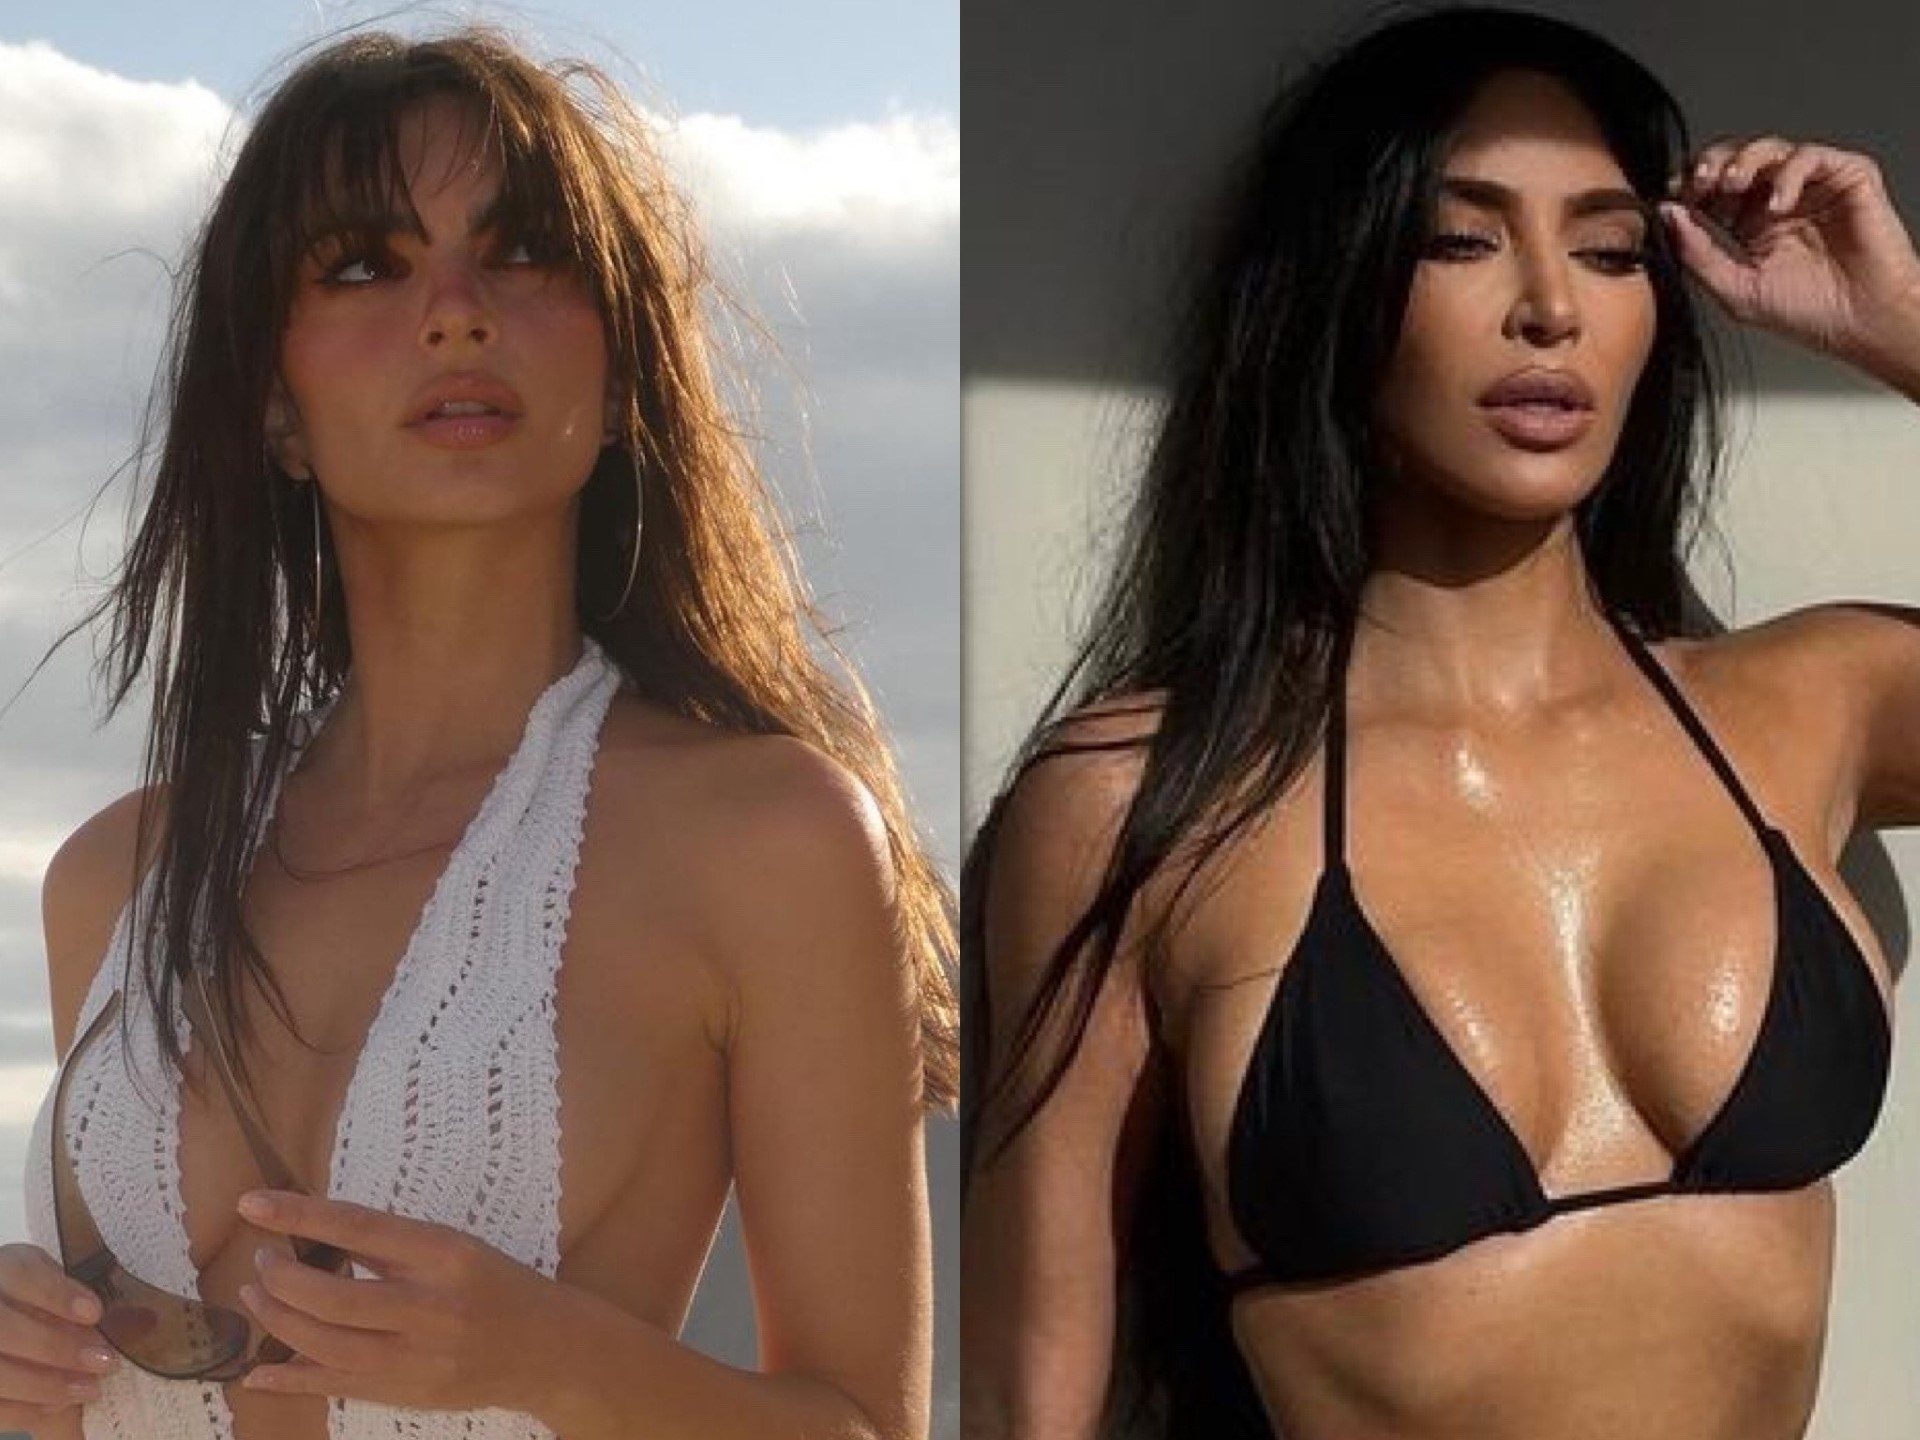 Kim Kardashian Designed Skims Swim So People Could “Cover